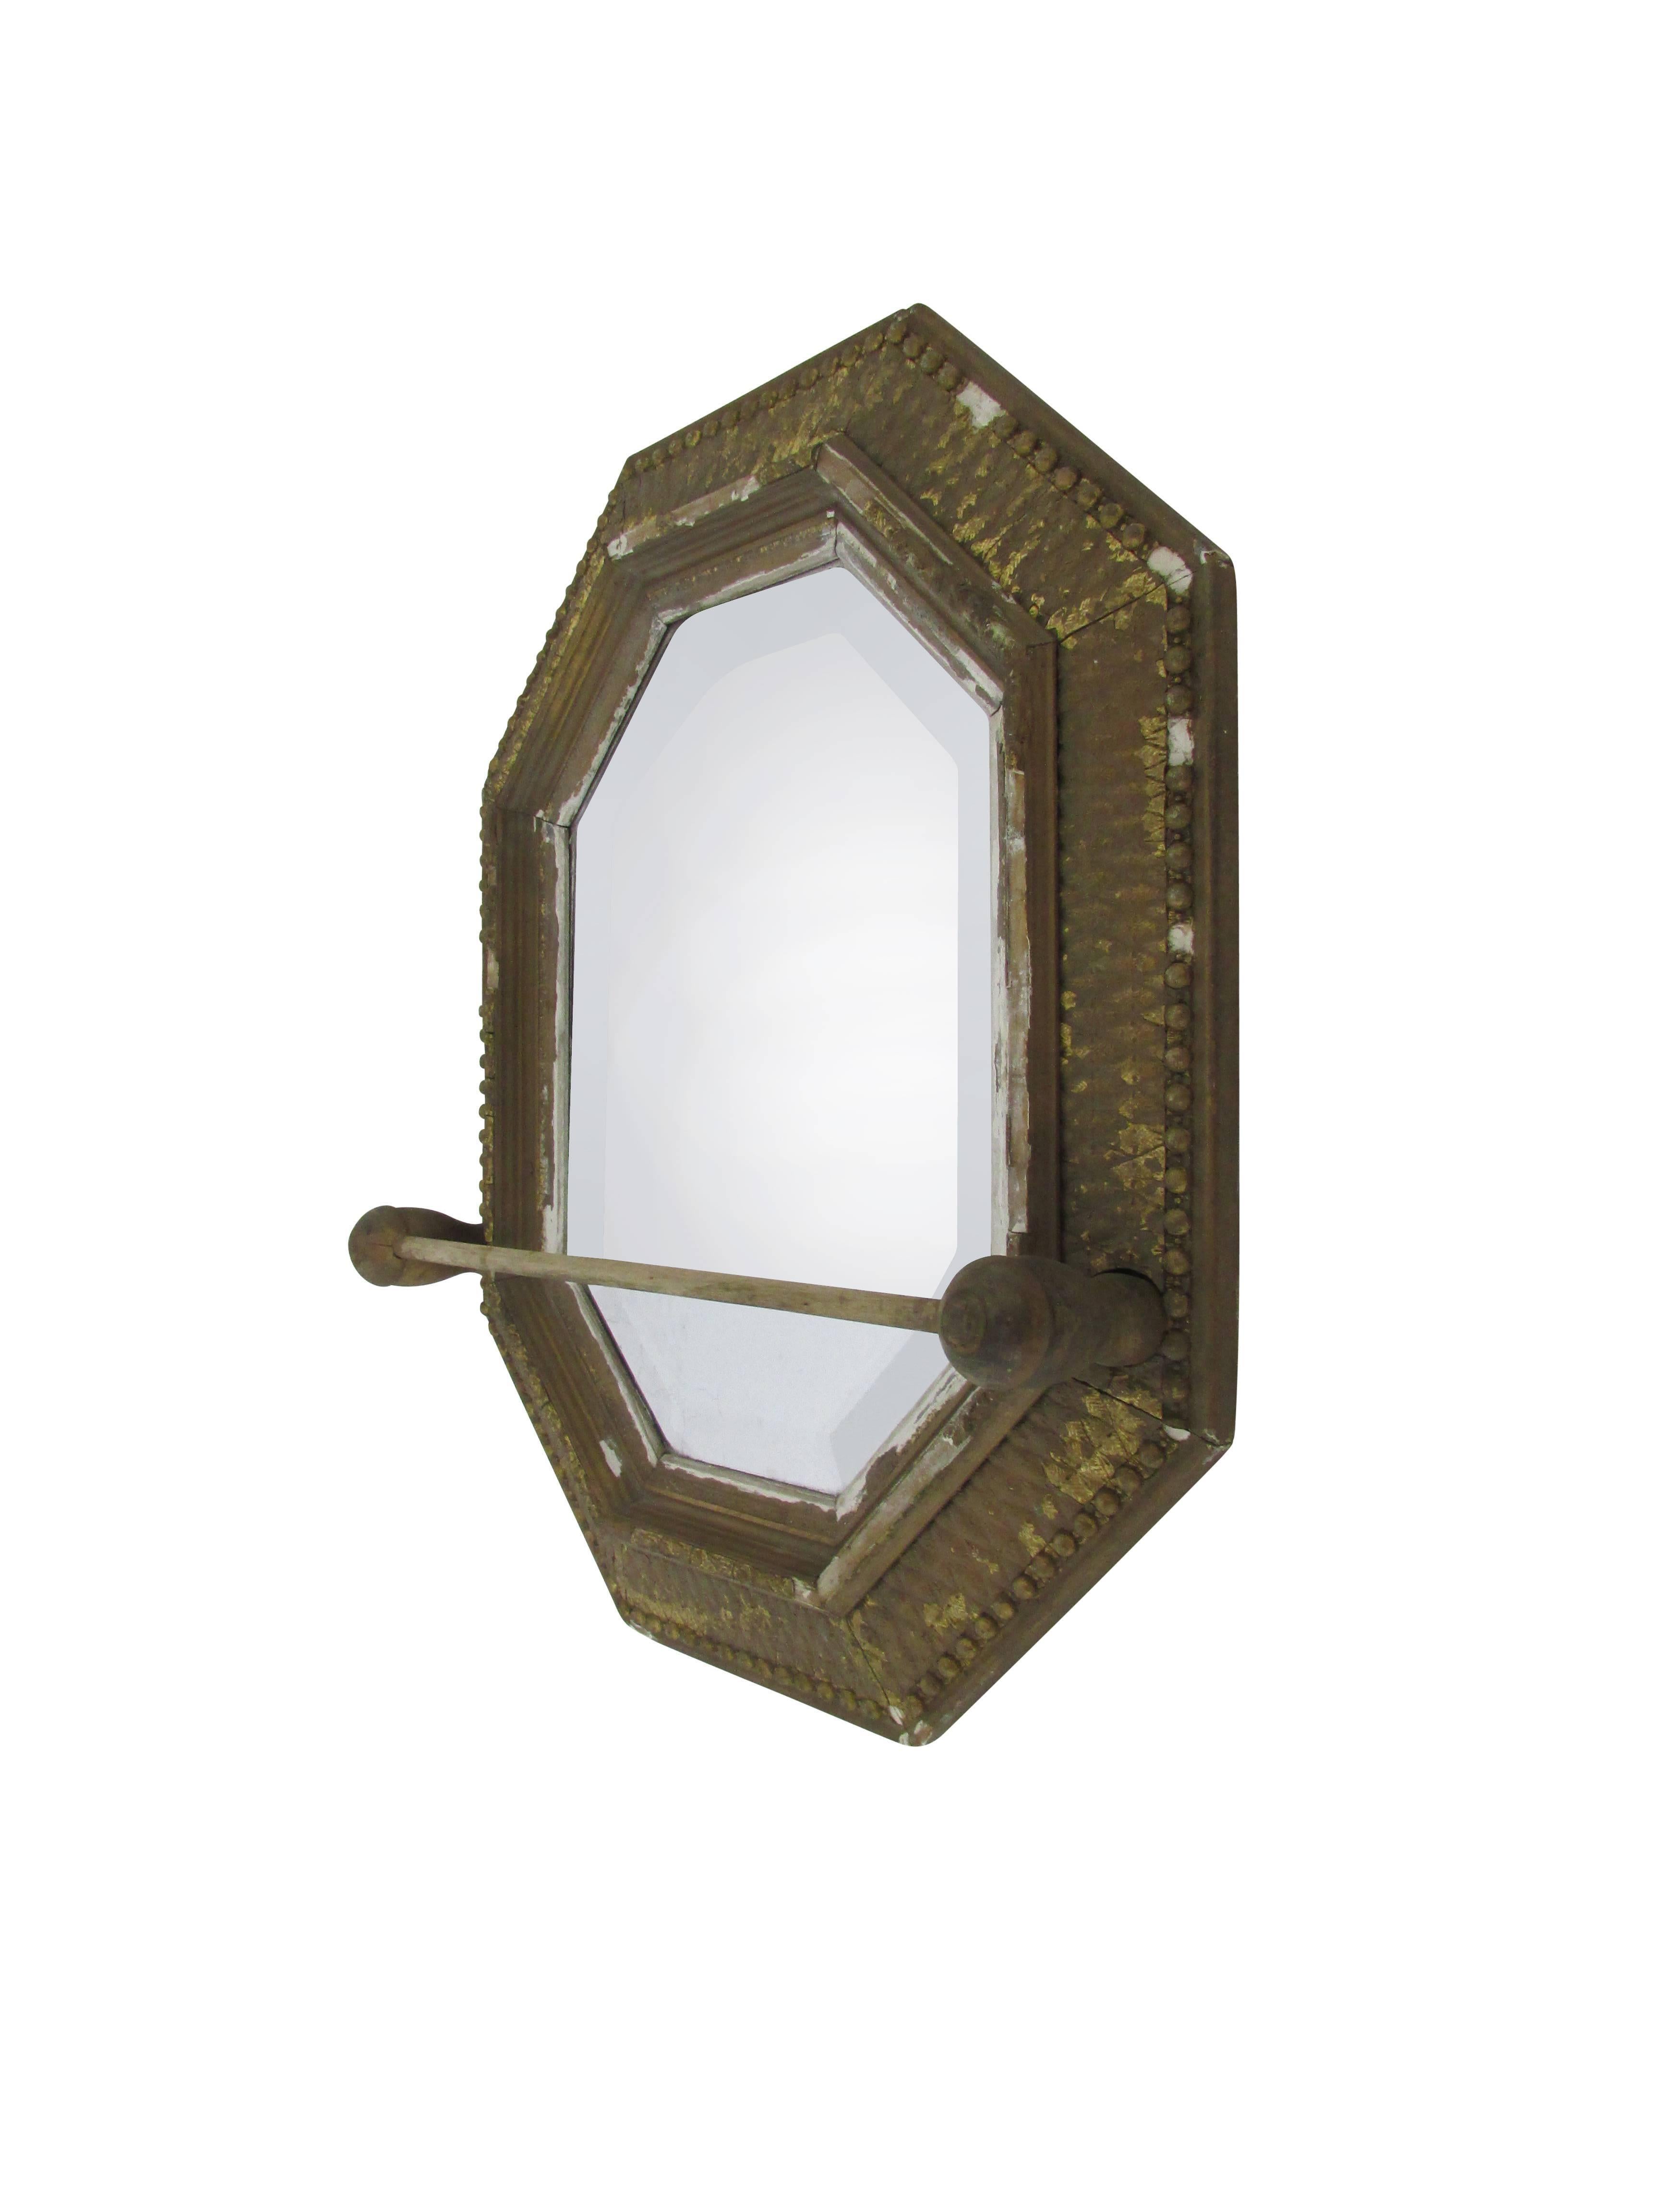 Folk Art Early Gilt Octagonal Mirror with Towel Bar